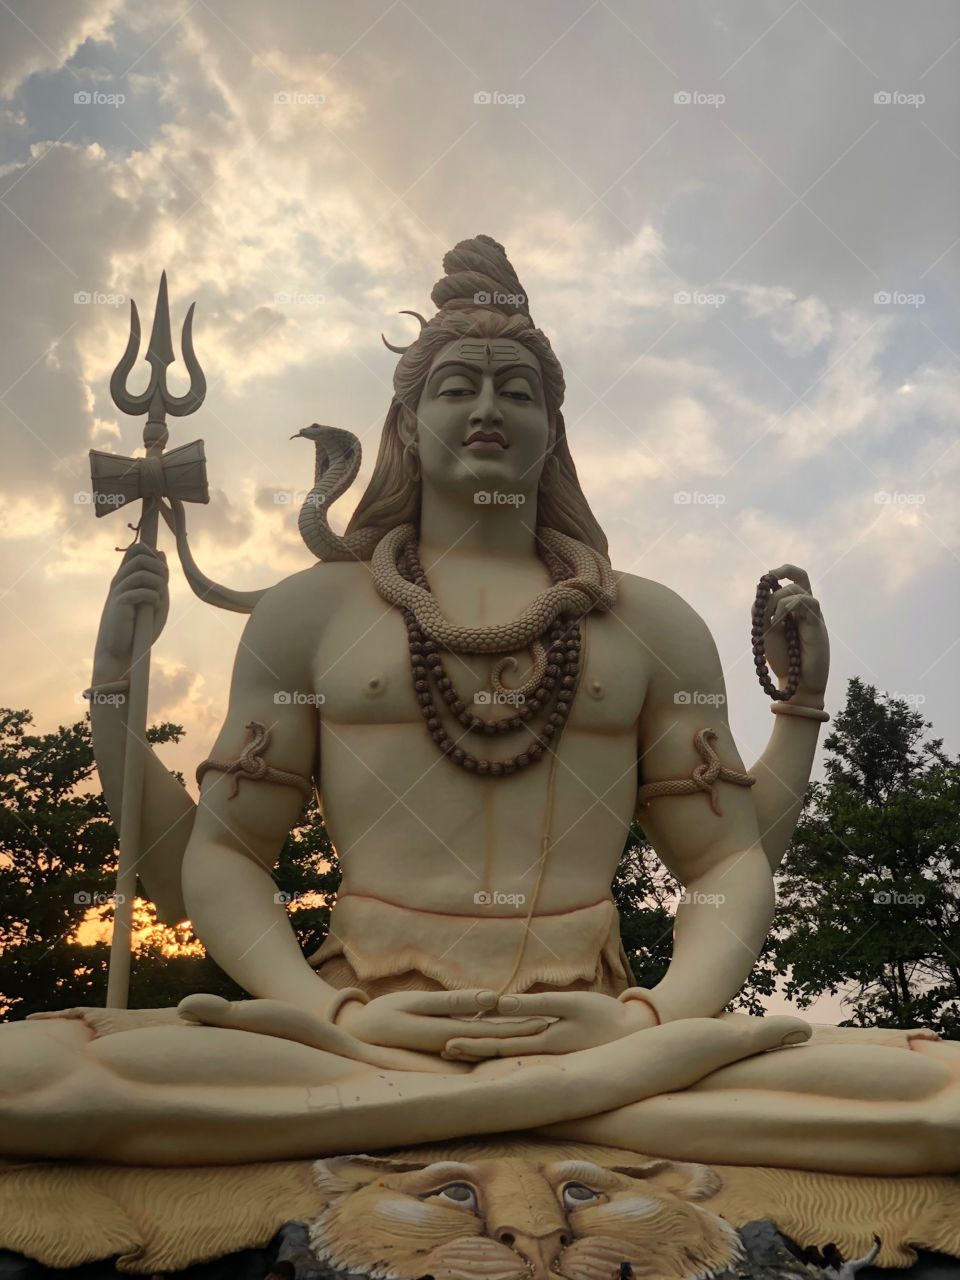 A majestic Lord Shiva Statue at Jabalpur, MP, India